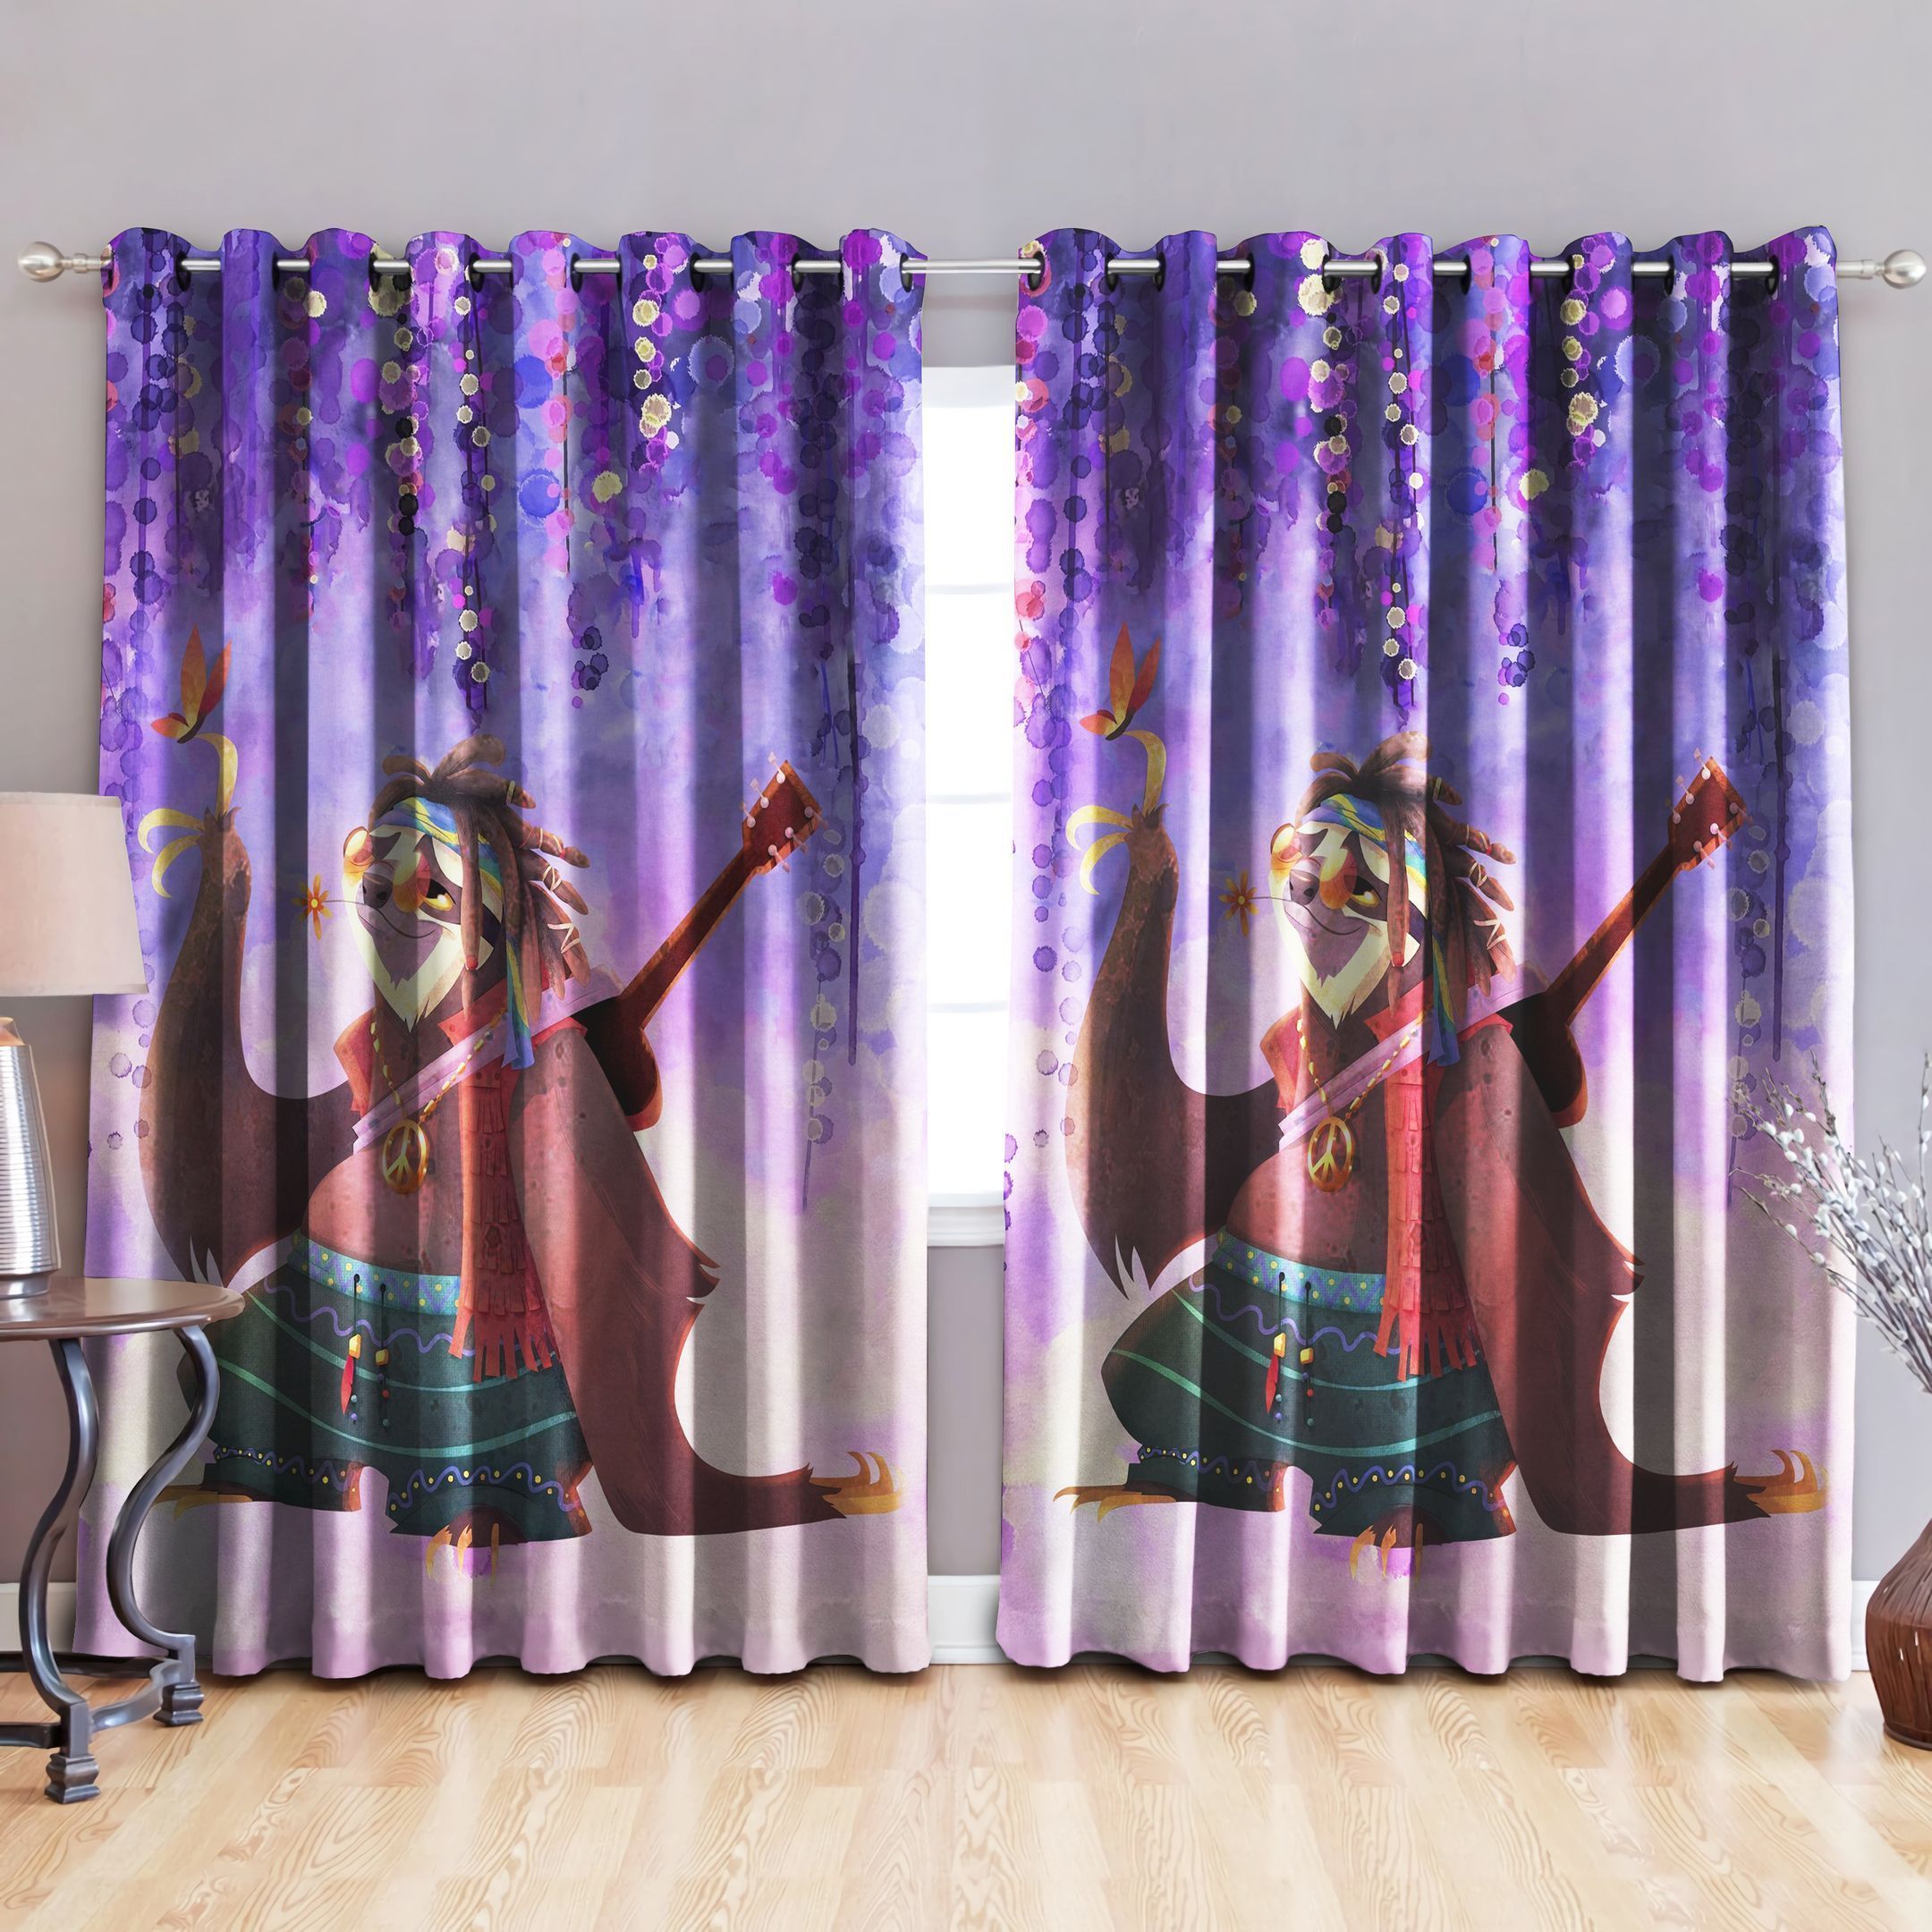 Hippie Sloth Purple Flower Printed Window Curtain Home Decor